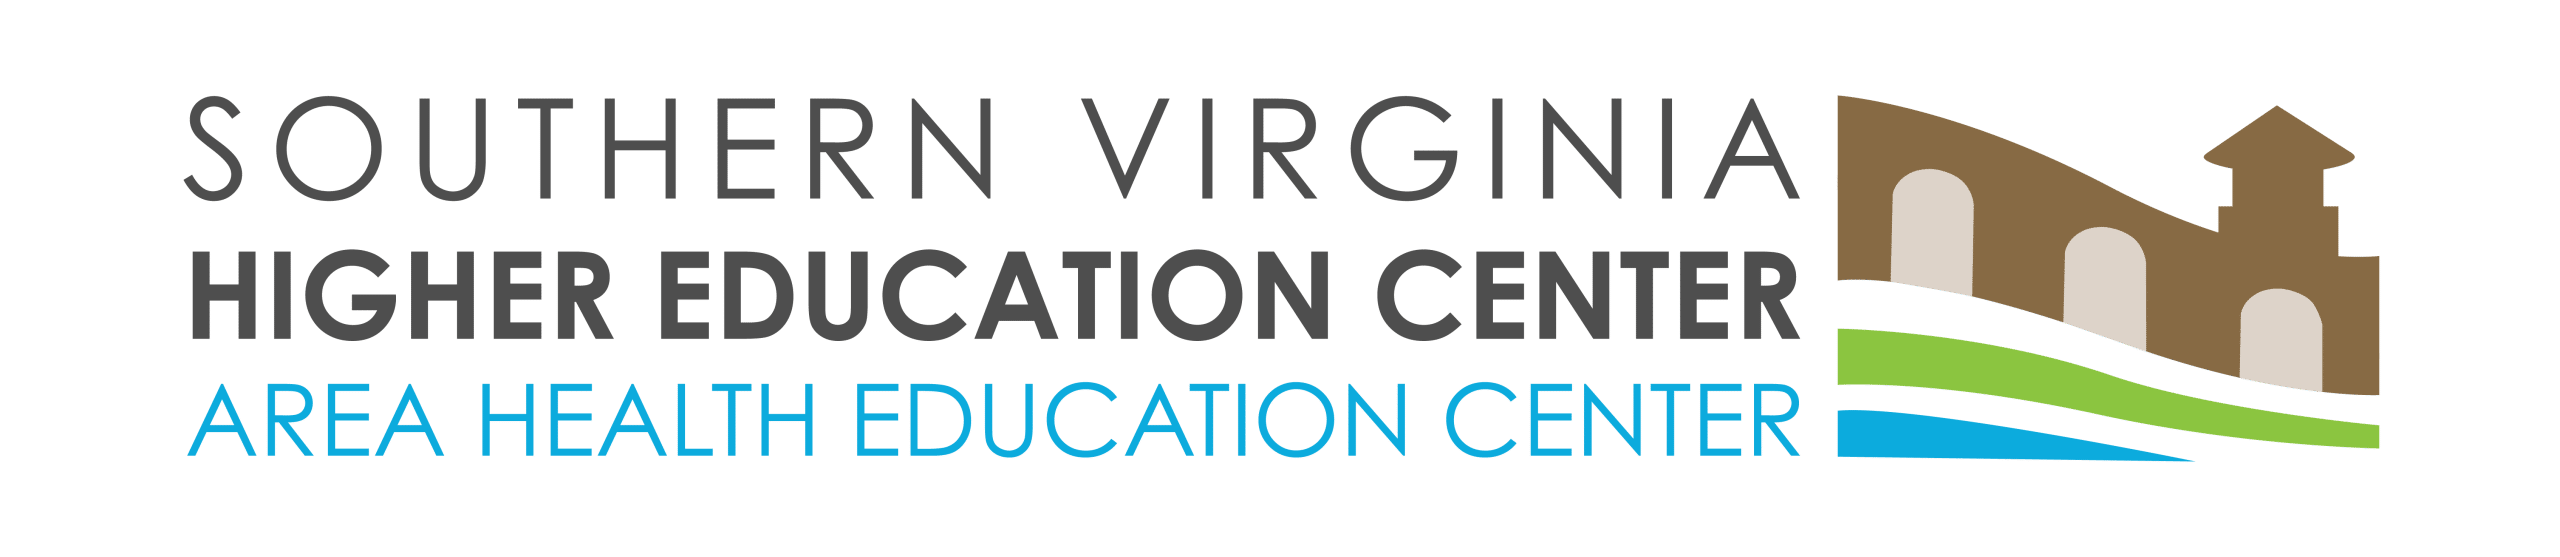 Southern Virginia Higher Education Center Area Health Education Center logo.